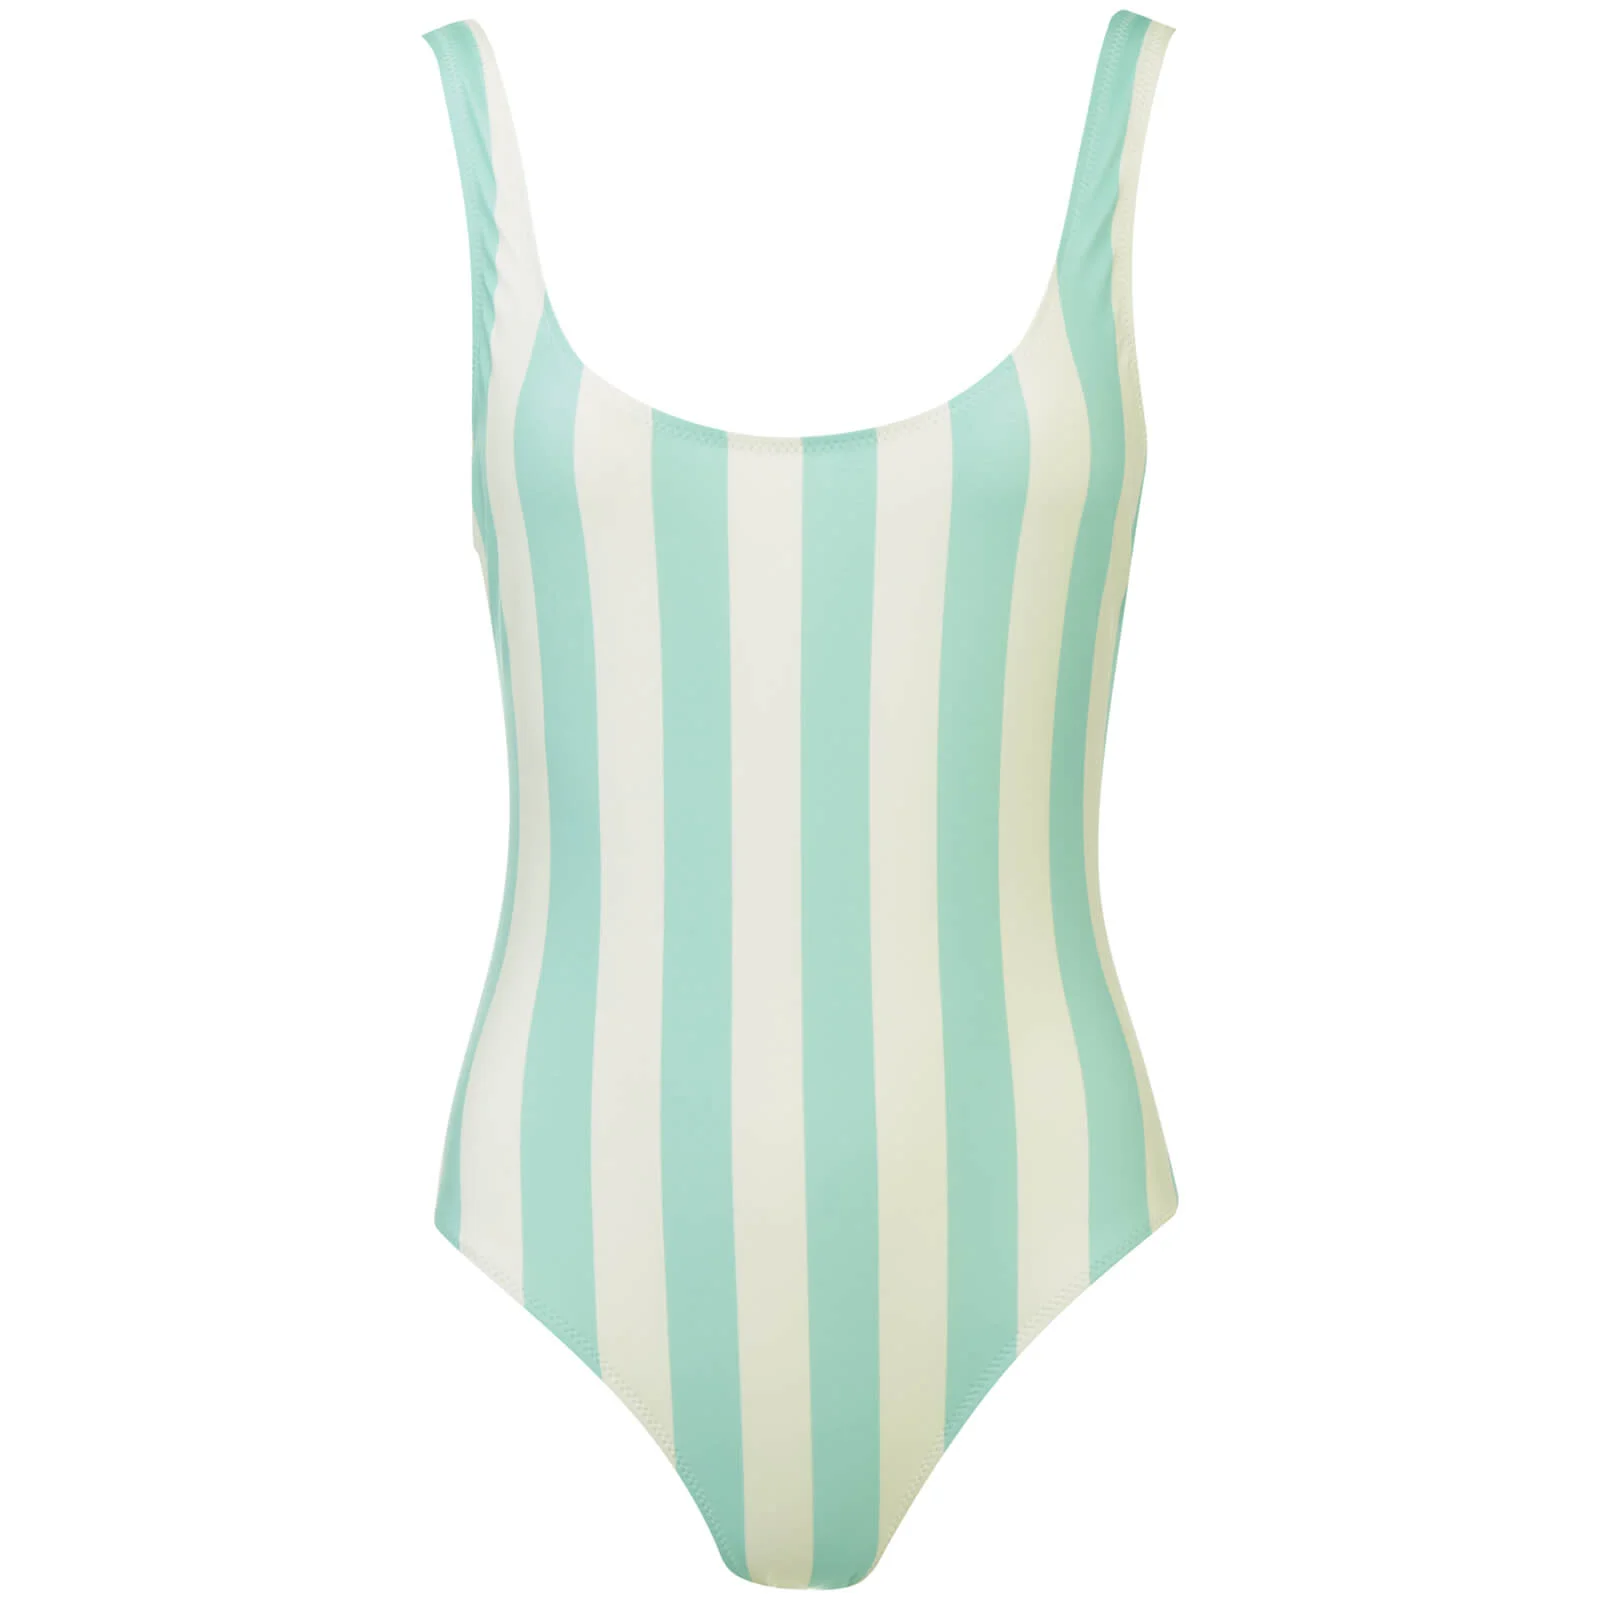 Solid & Striped Women's The Anne-Marie Swimsuit - Aqua/Cream Stripe Image 1